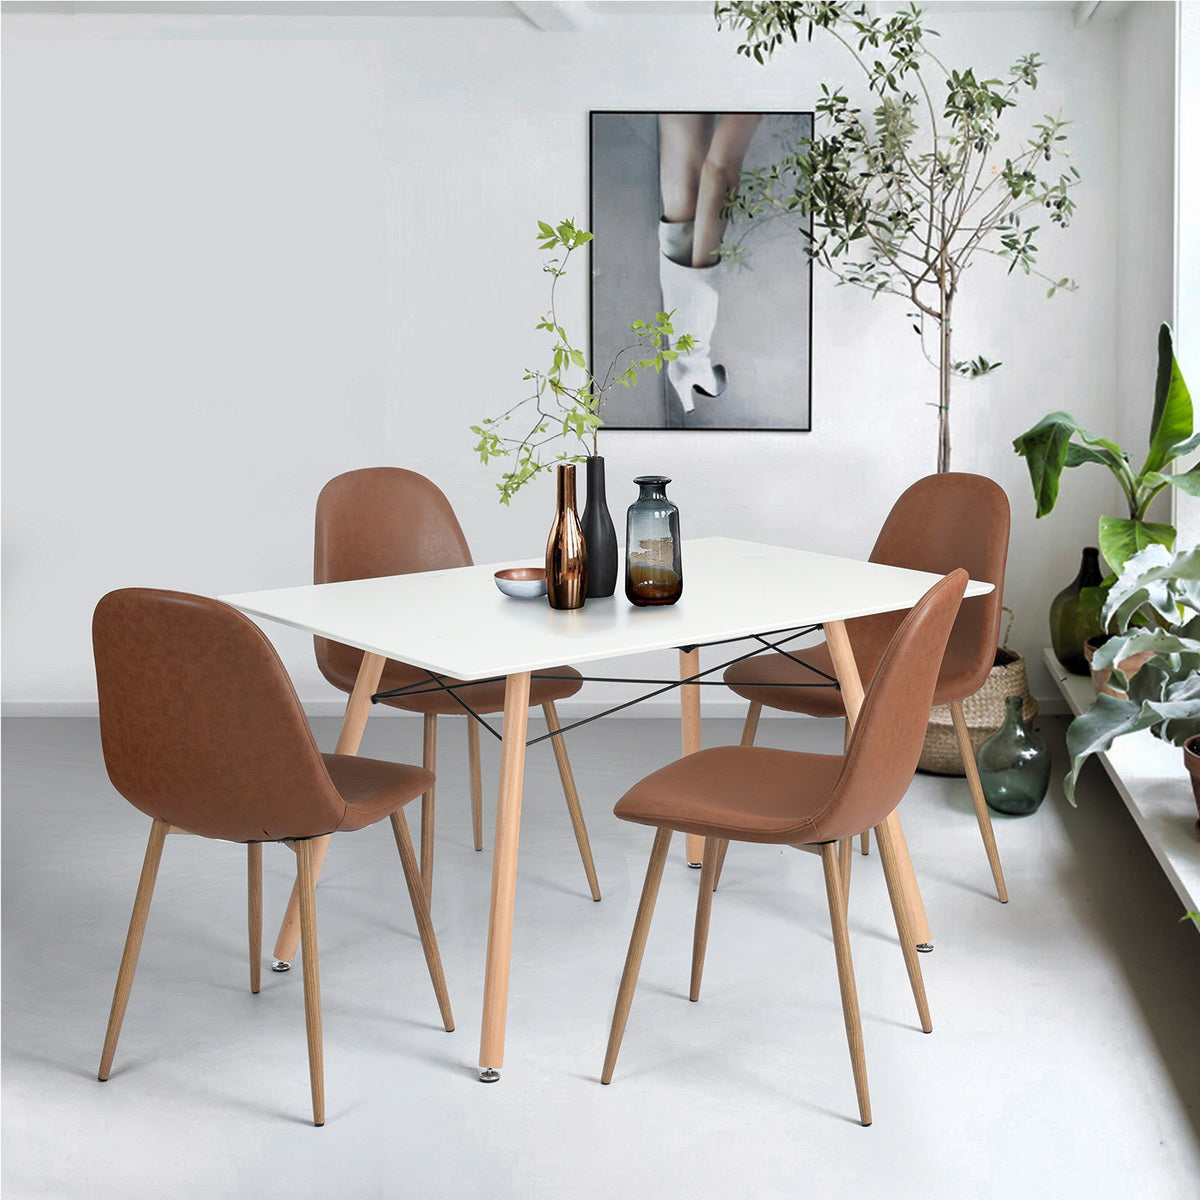 Set of 2 designer fabric dining chairs - CHARLTON